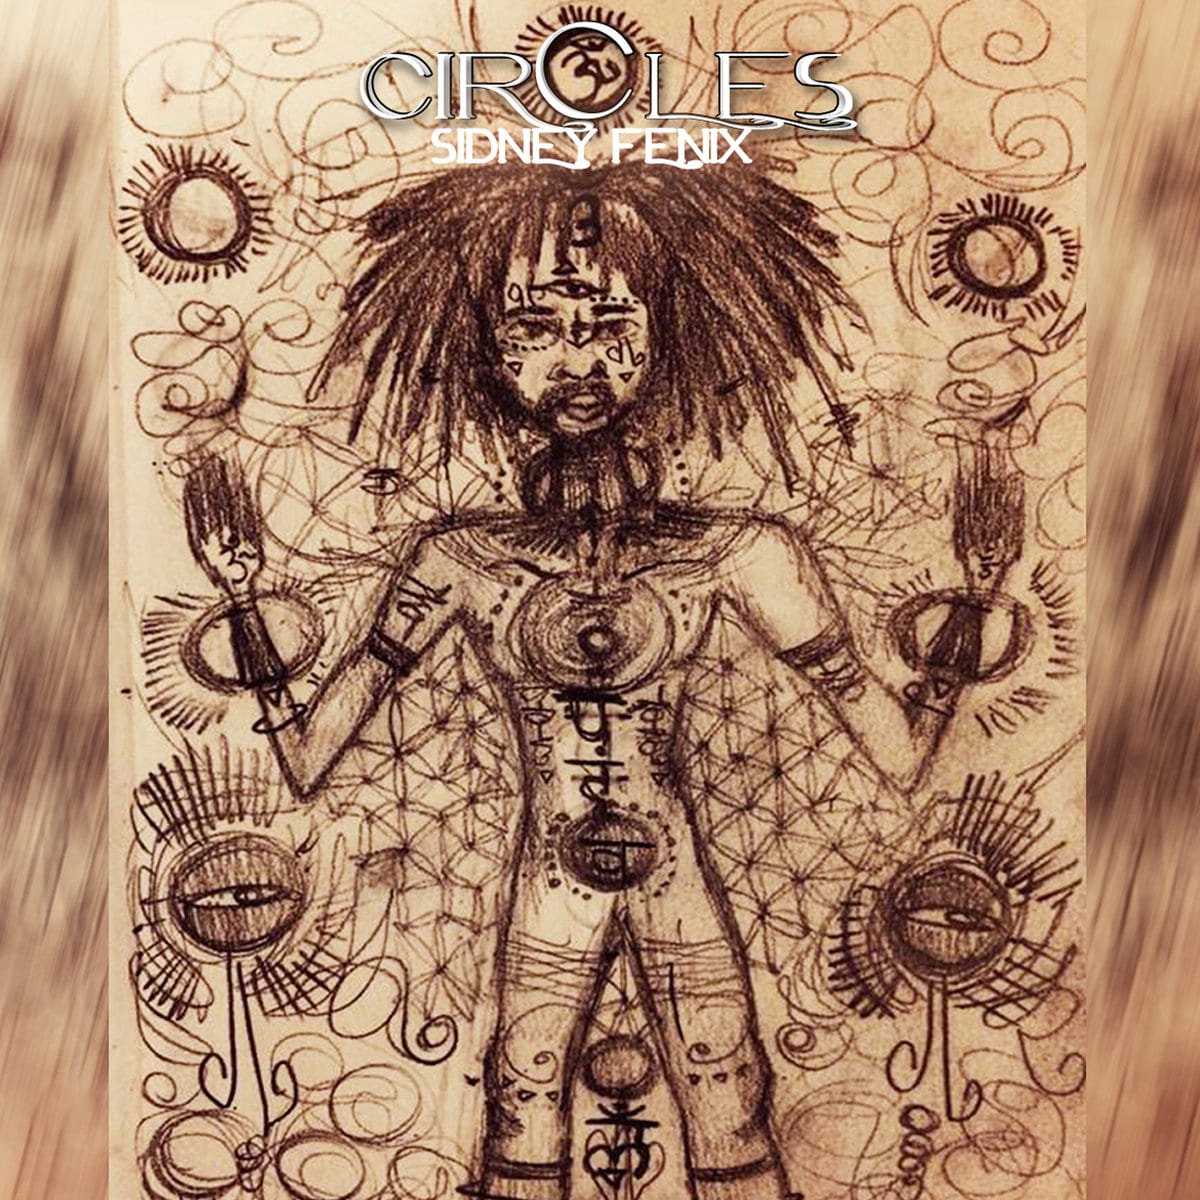 Sidney Fenix - "Circles" (Release)